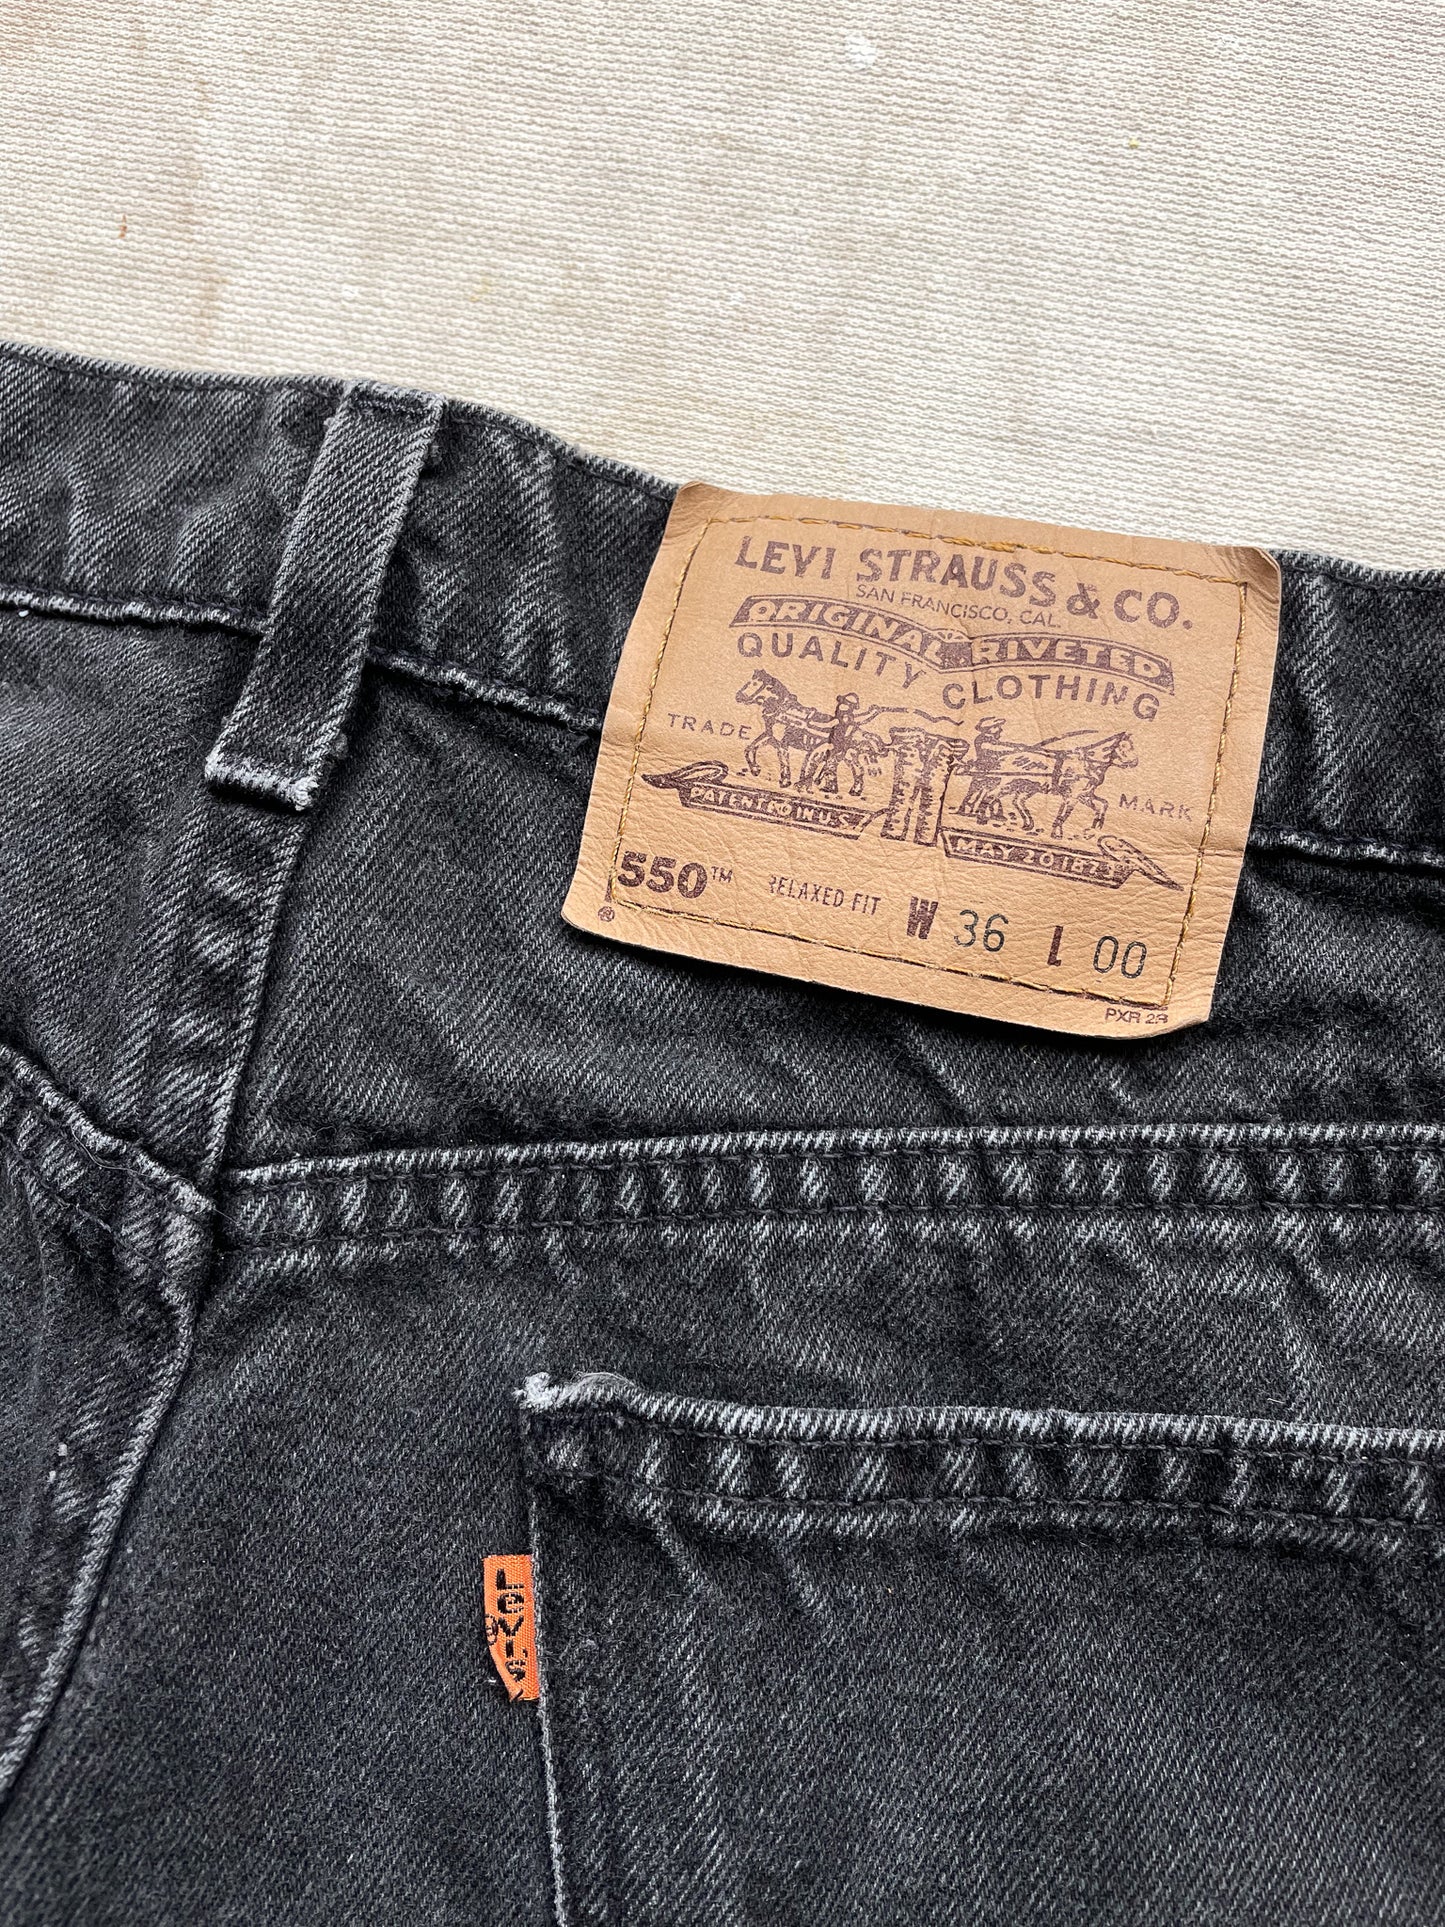 80's Levi's Orange Tab 550 Shorts—[36]